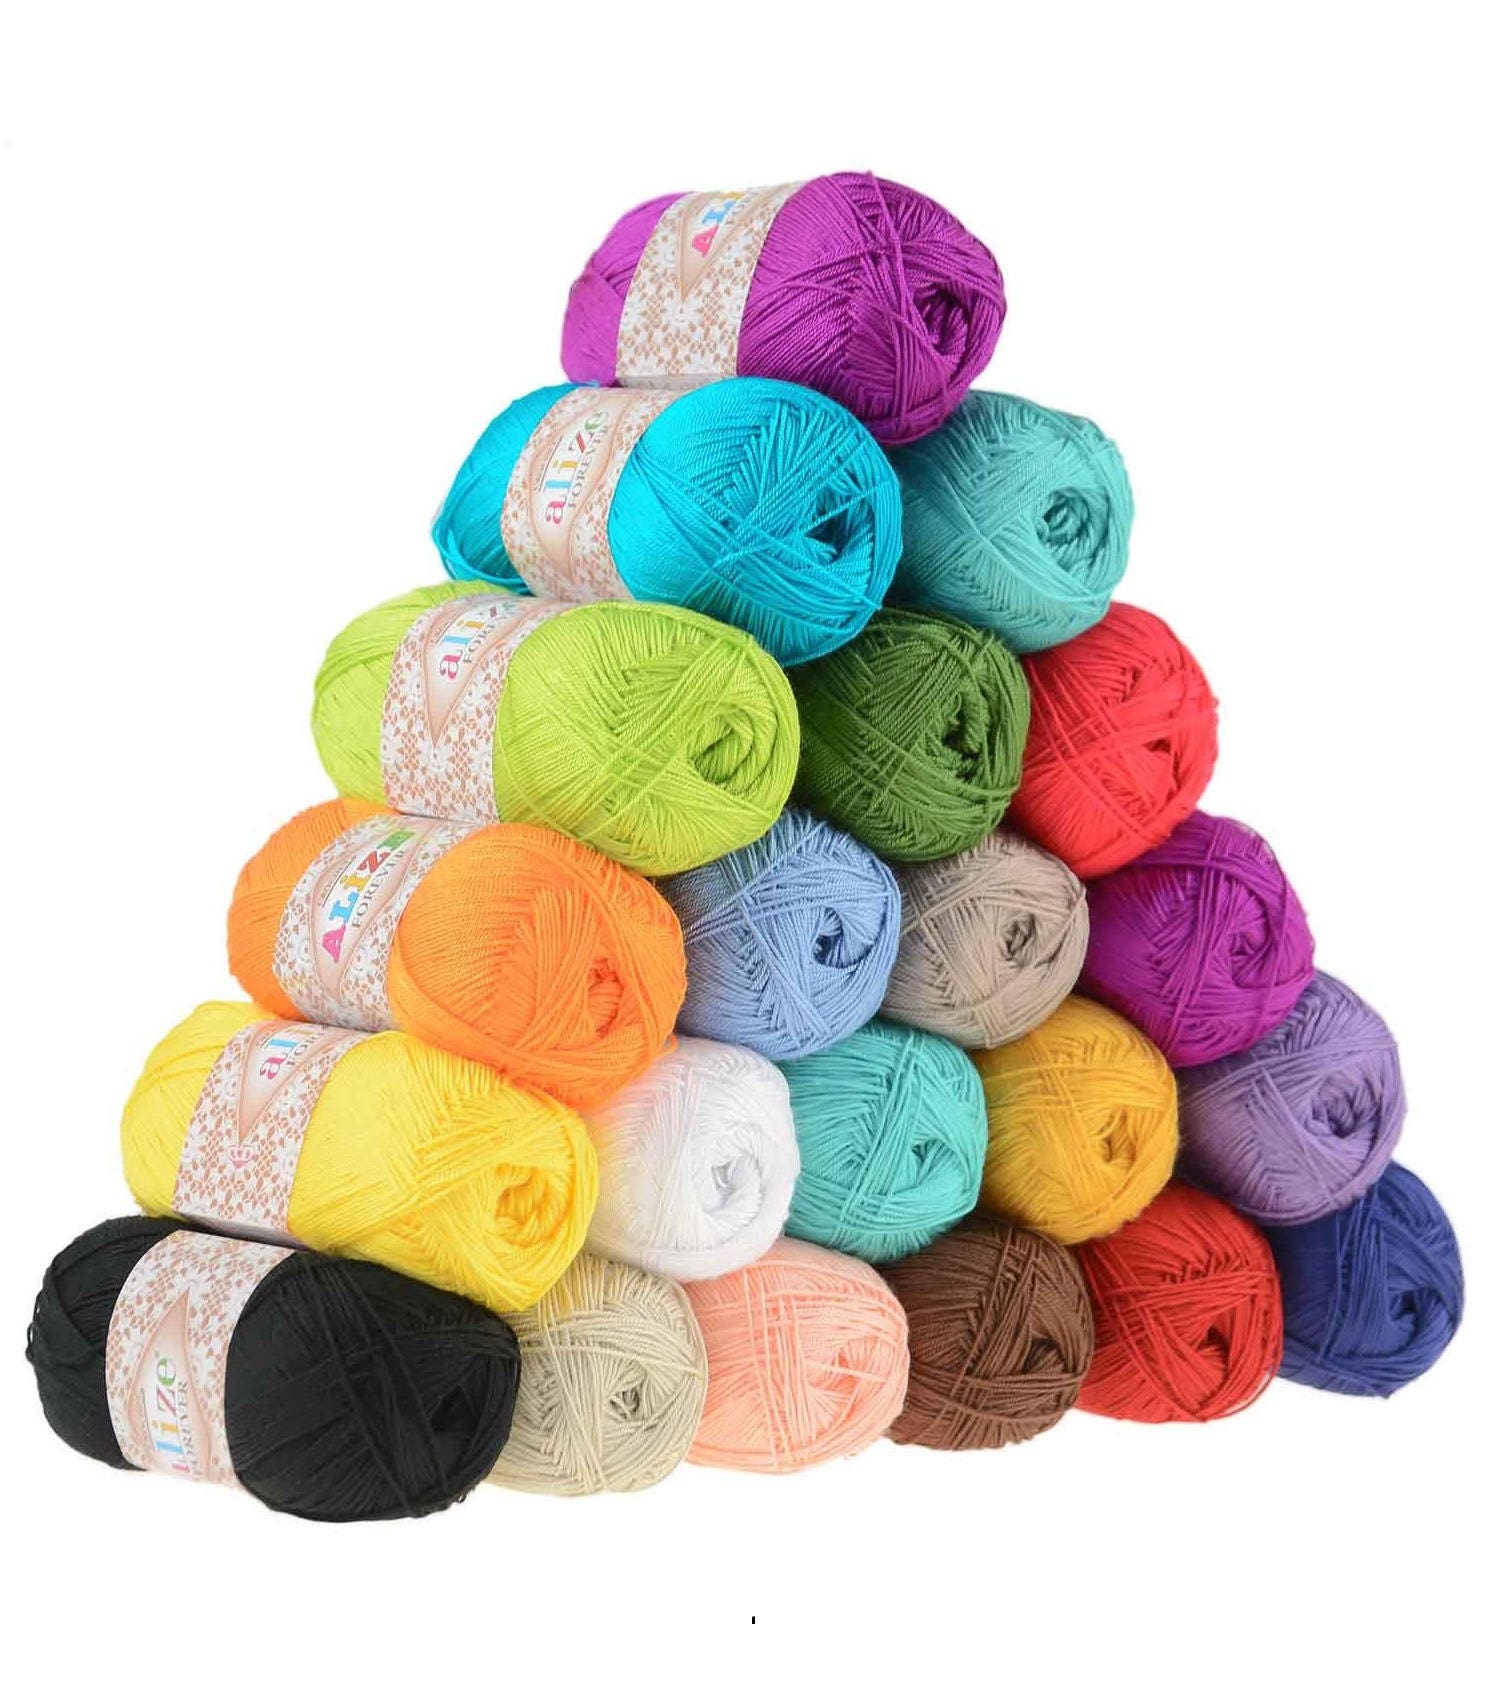 Multicolored Yarn for Crocheting - Microfiber Silk & Acrylic Yarn for Crocheting & Knitting - Lightweight & Soft Alize Diva Batik Mercerized for